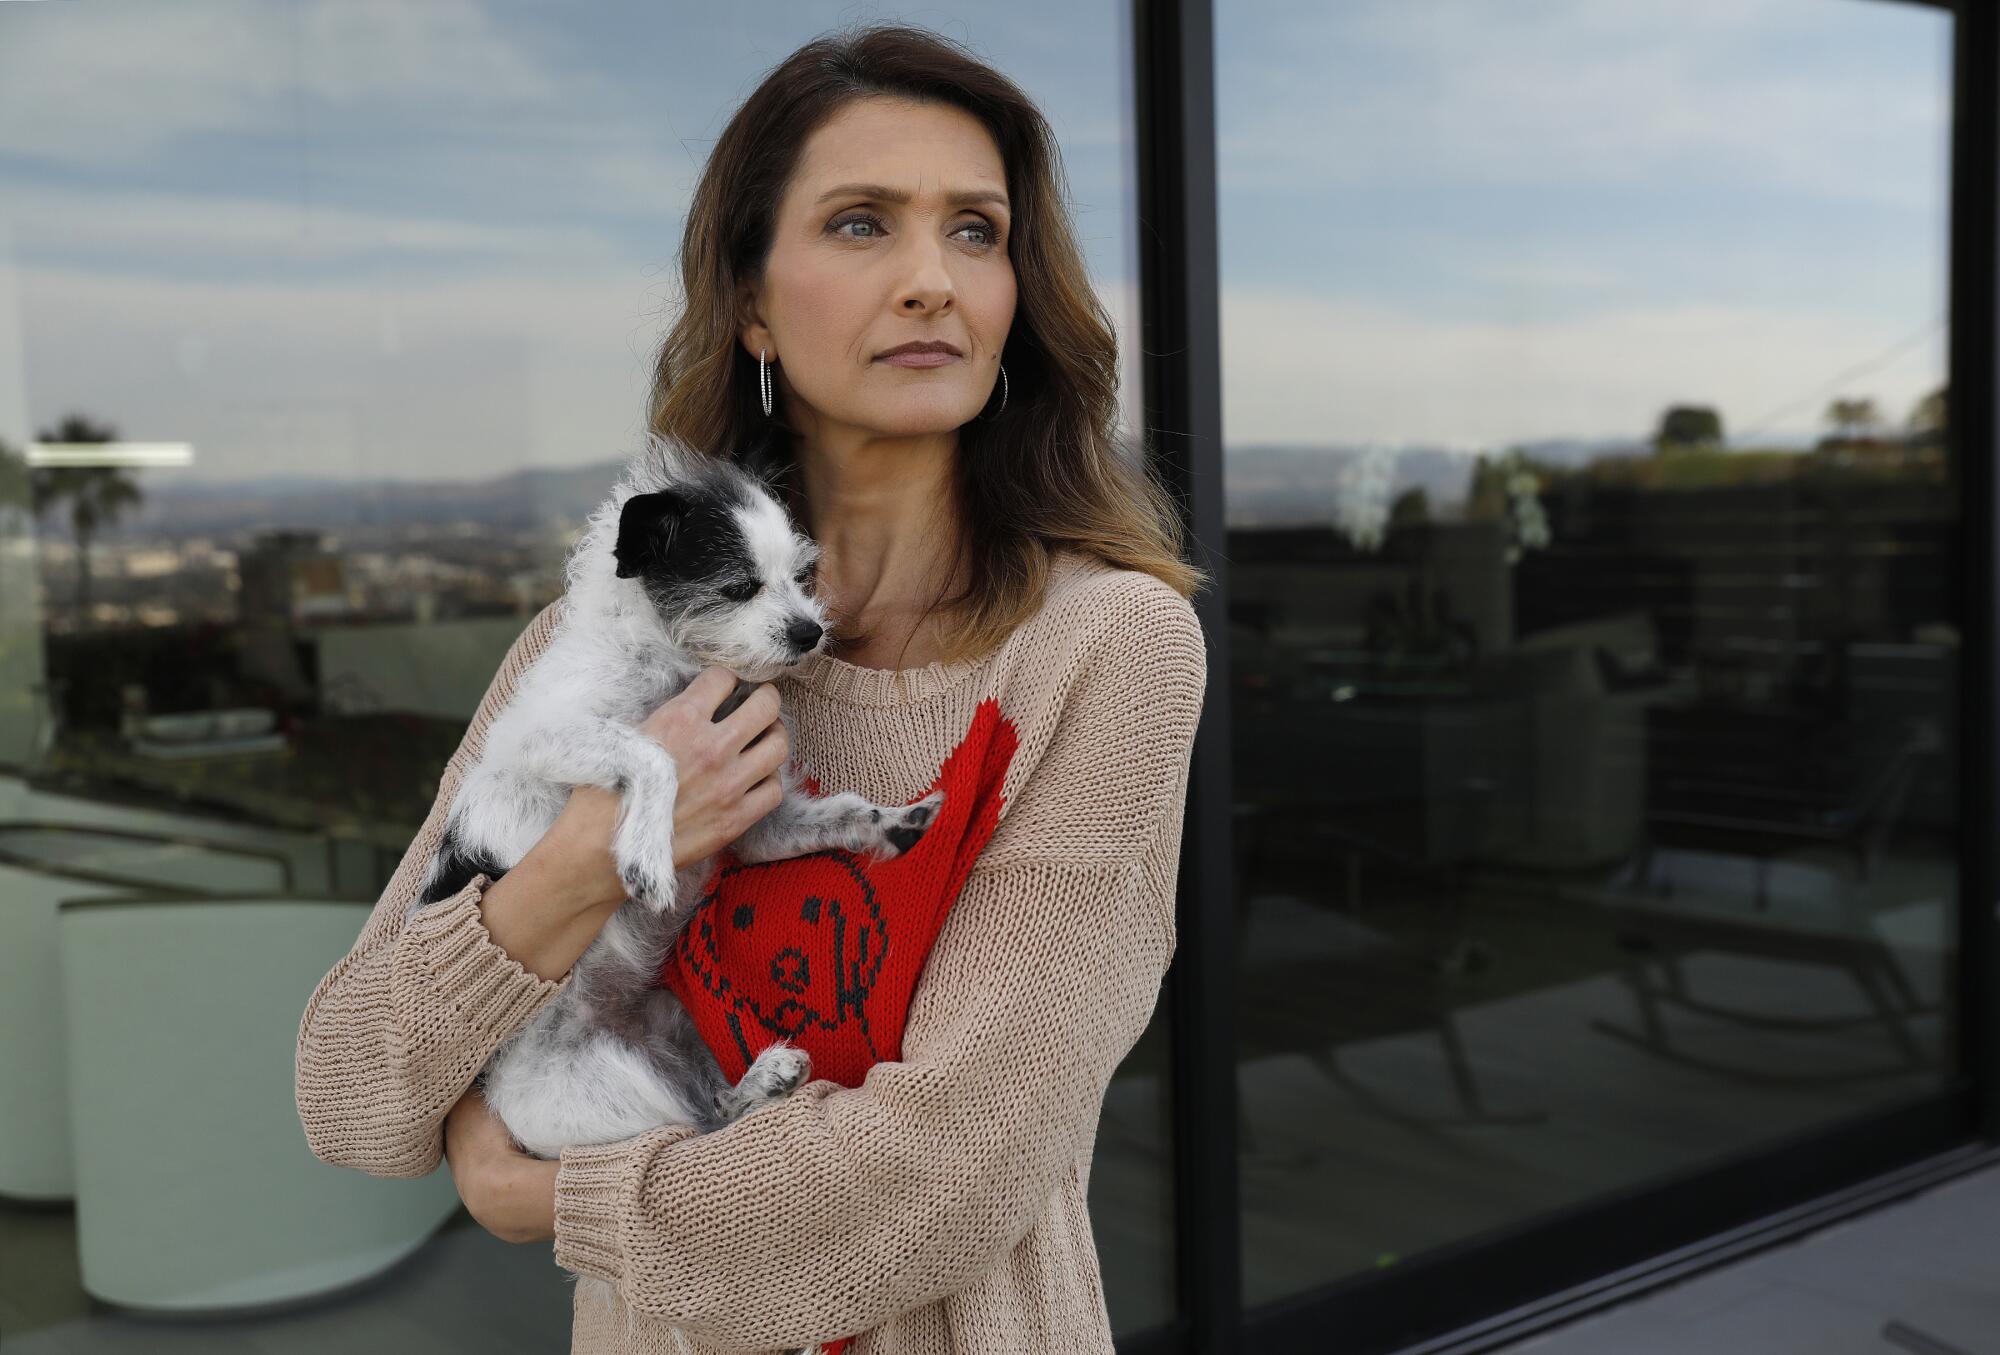 Valarie Ianniello, former executive director of the Animal Hope & Wellness Foundation